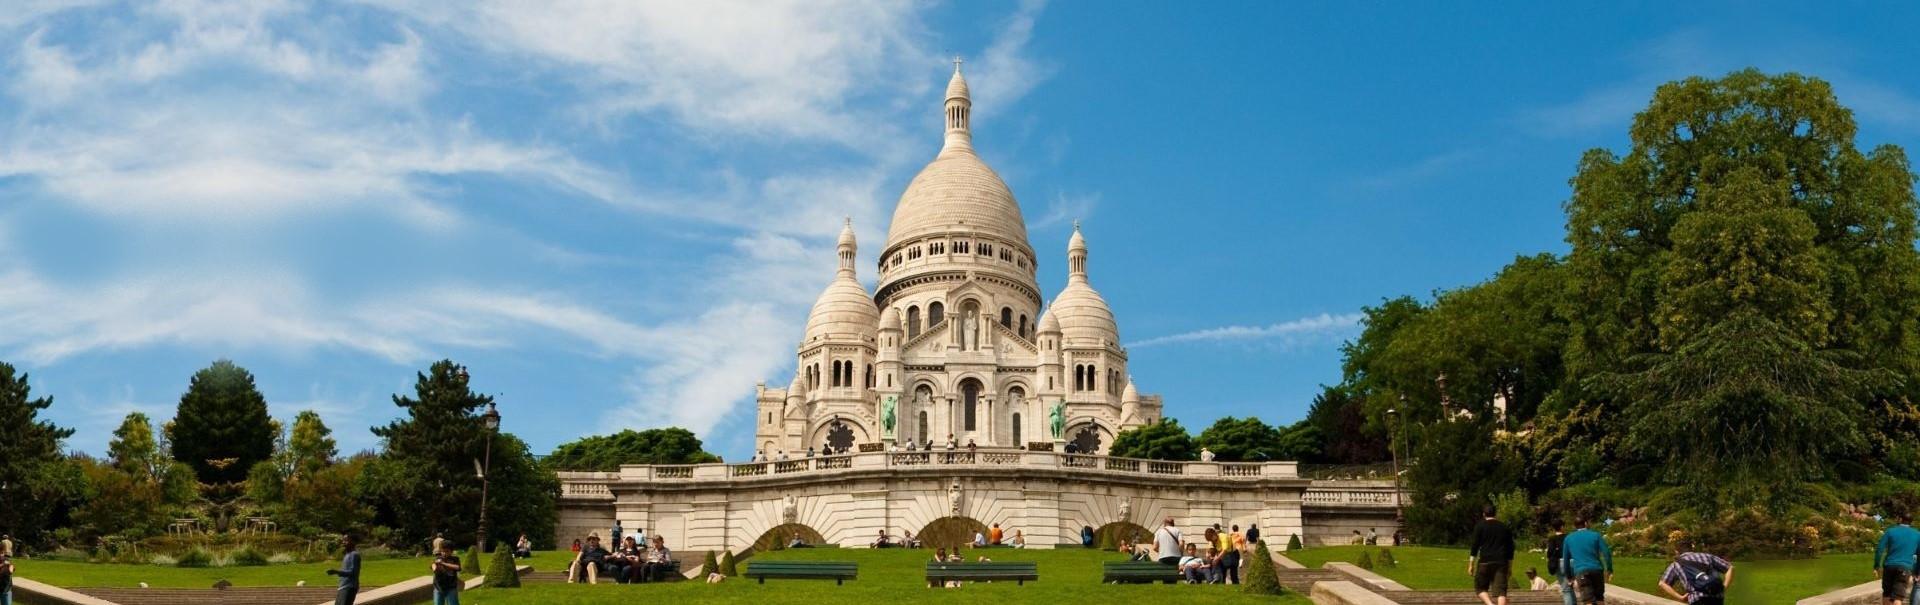 کلیسای سَکره کُر مونمارتر-Sacré-Cœur de Montmartre Paris